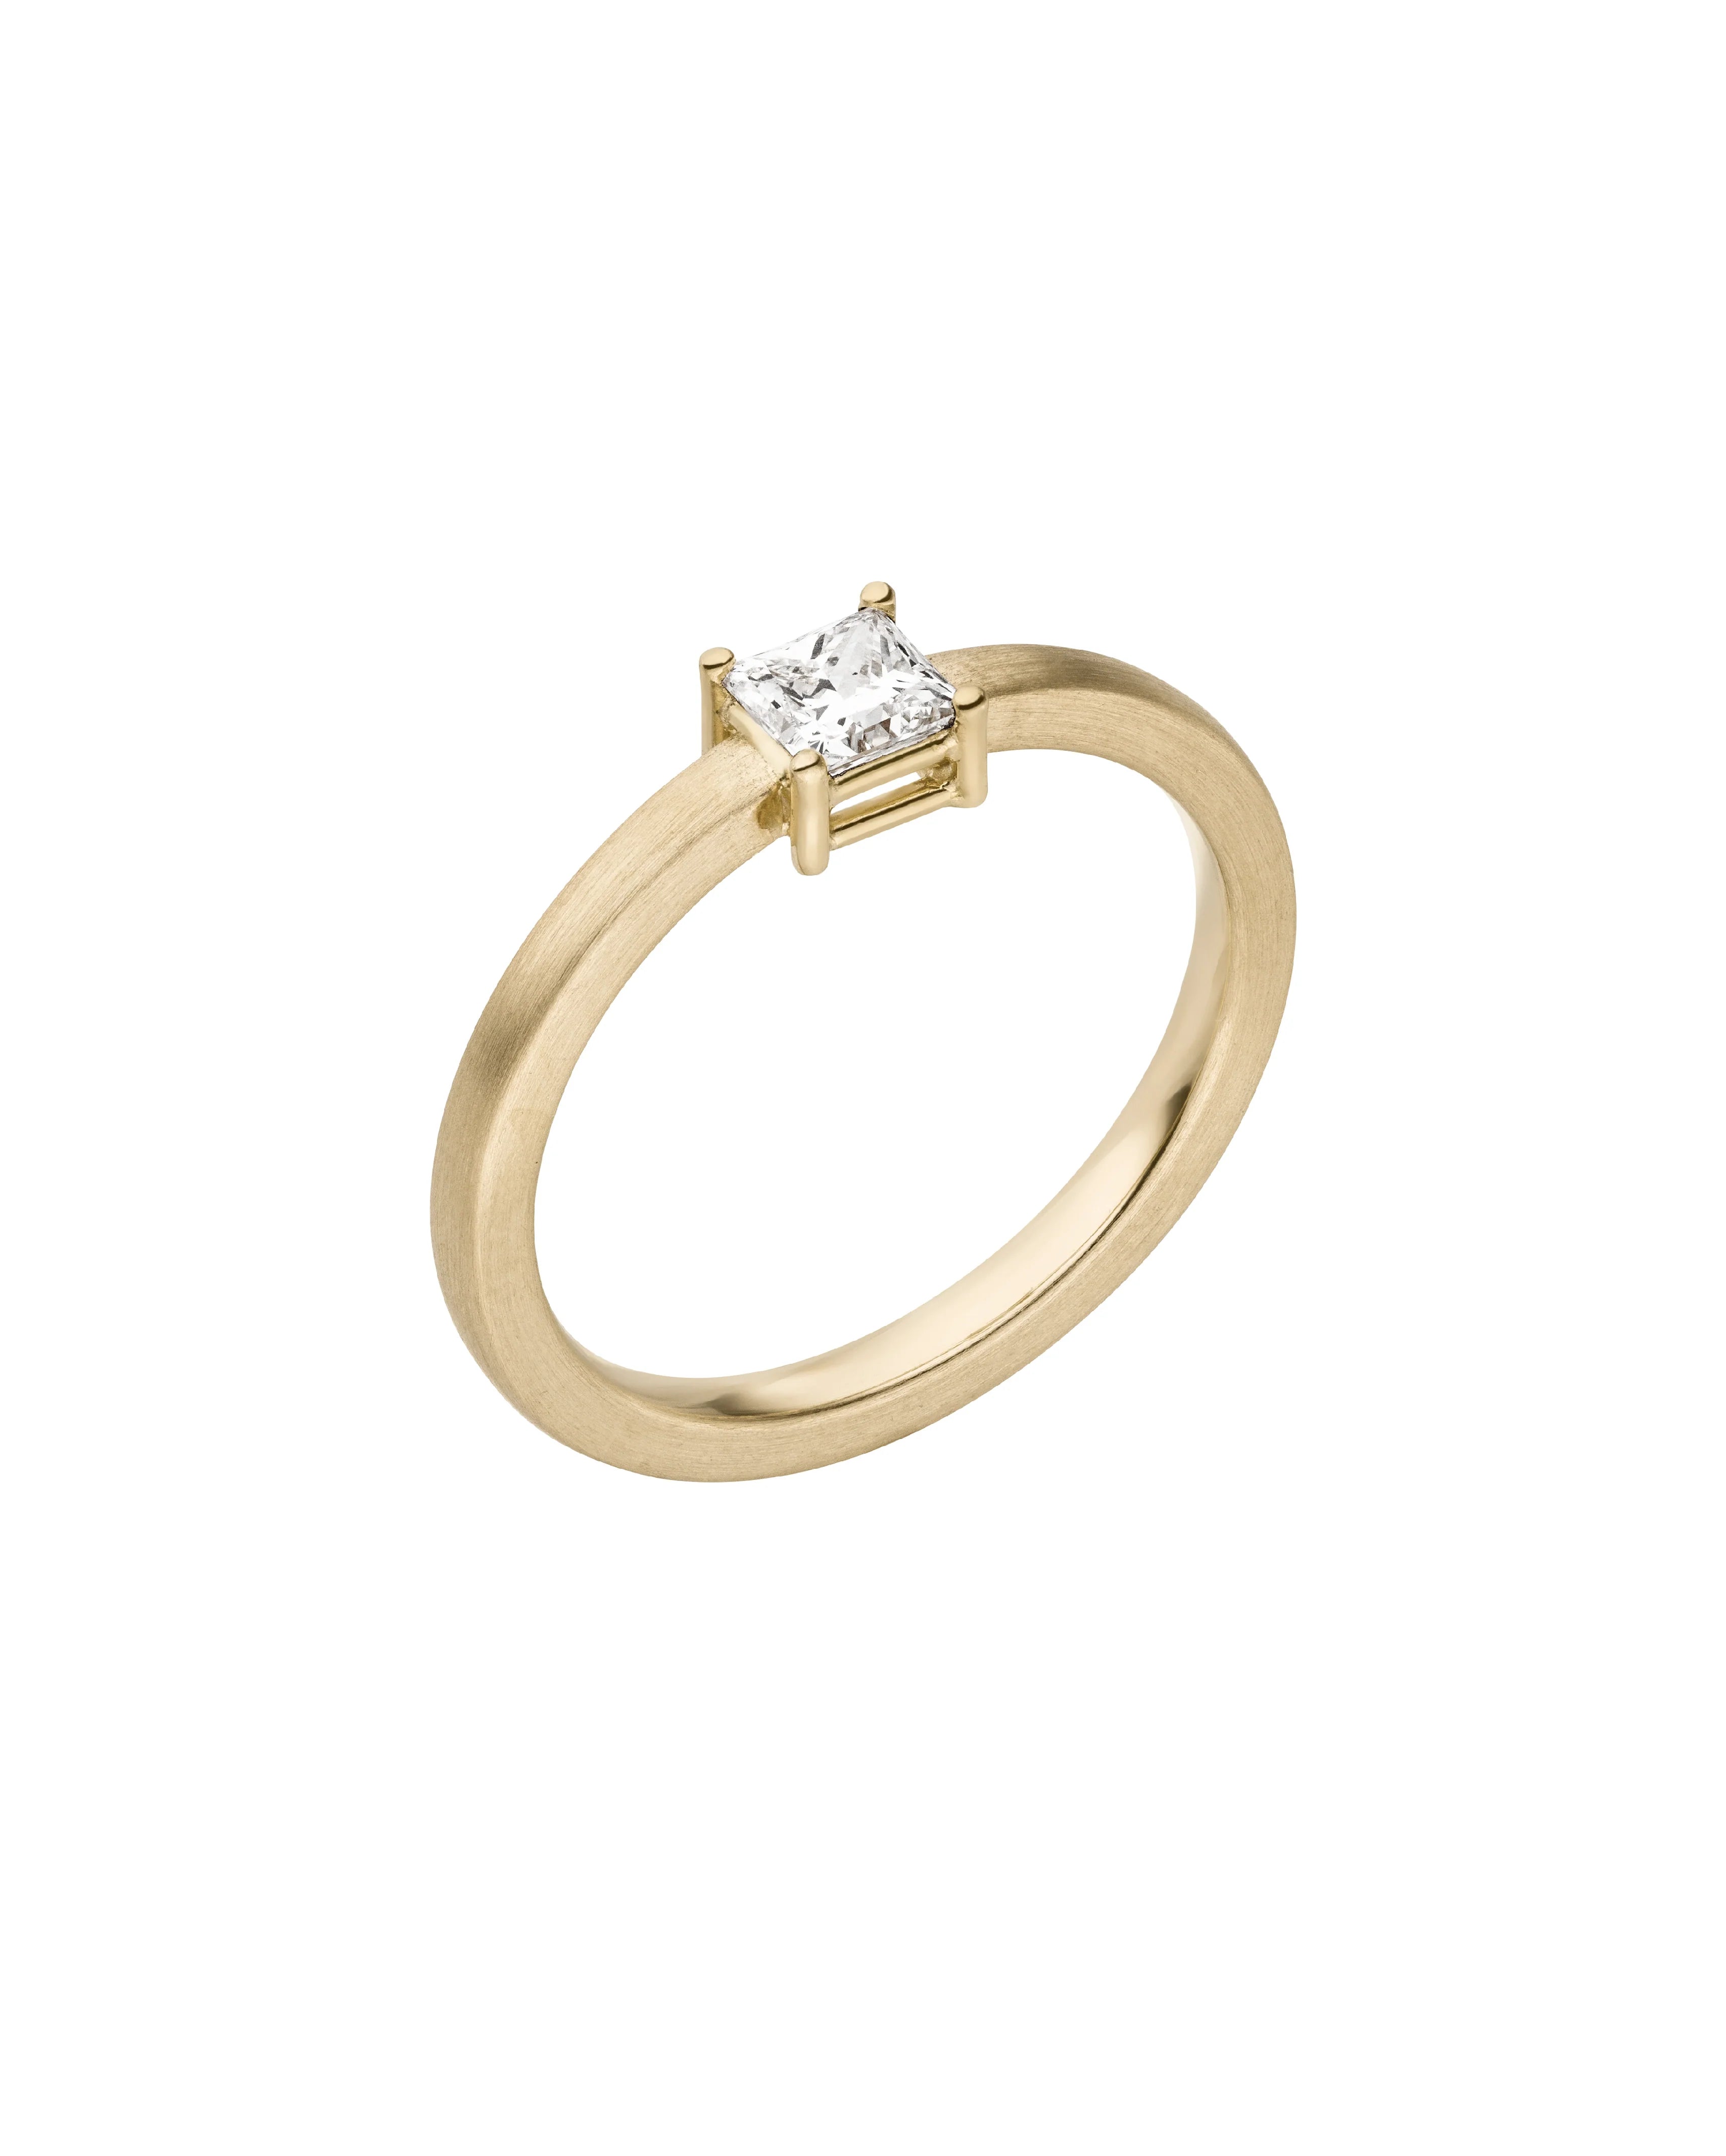 Diana - Verlobungsring Gold - Gelbgold 585